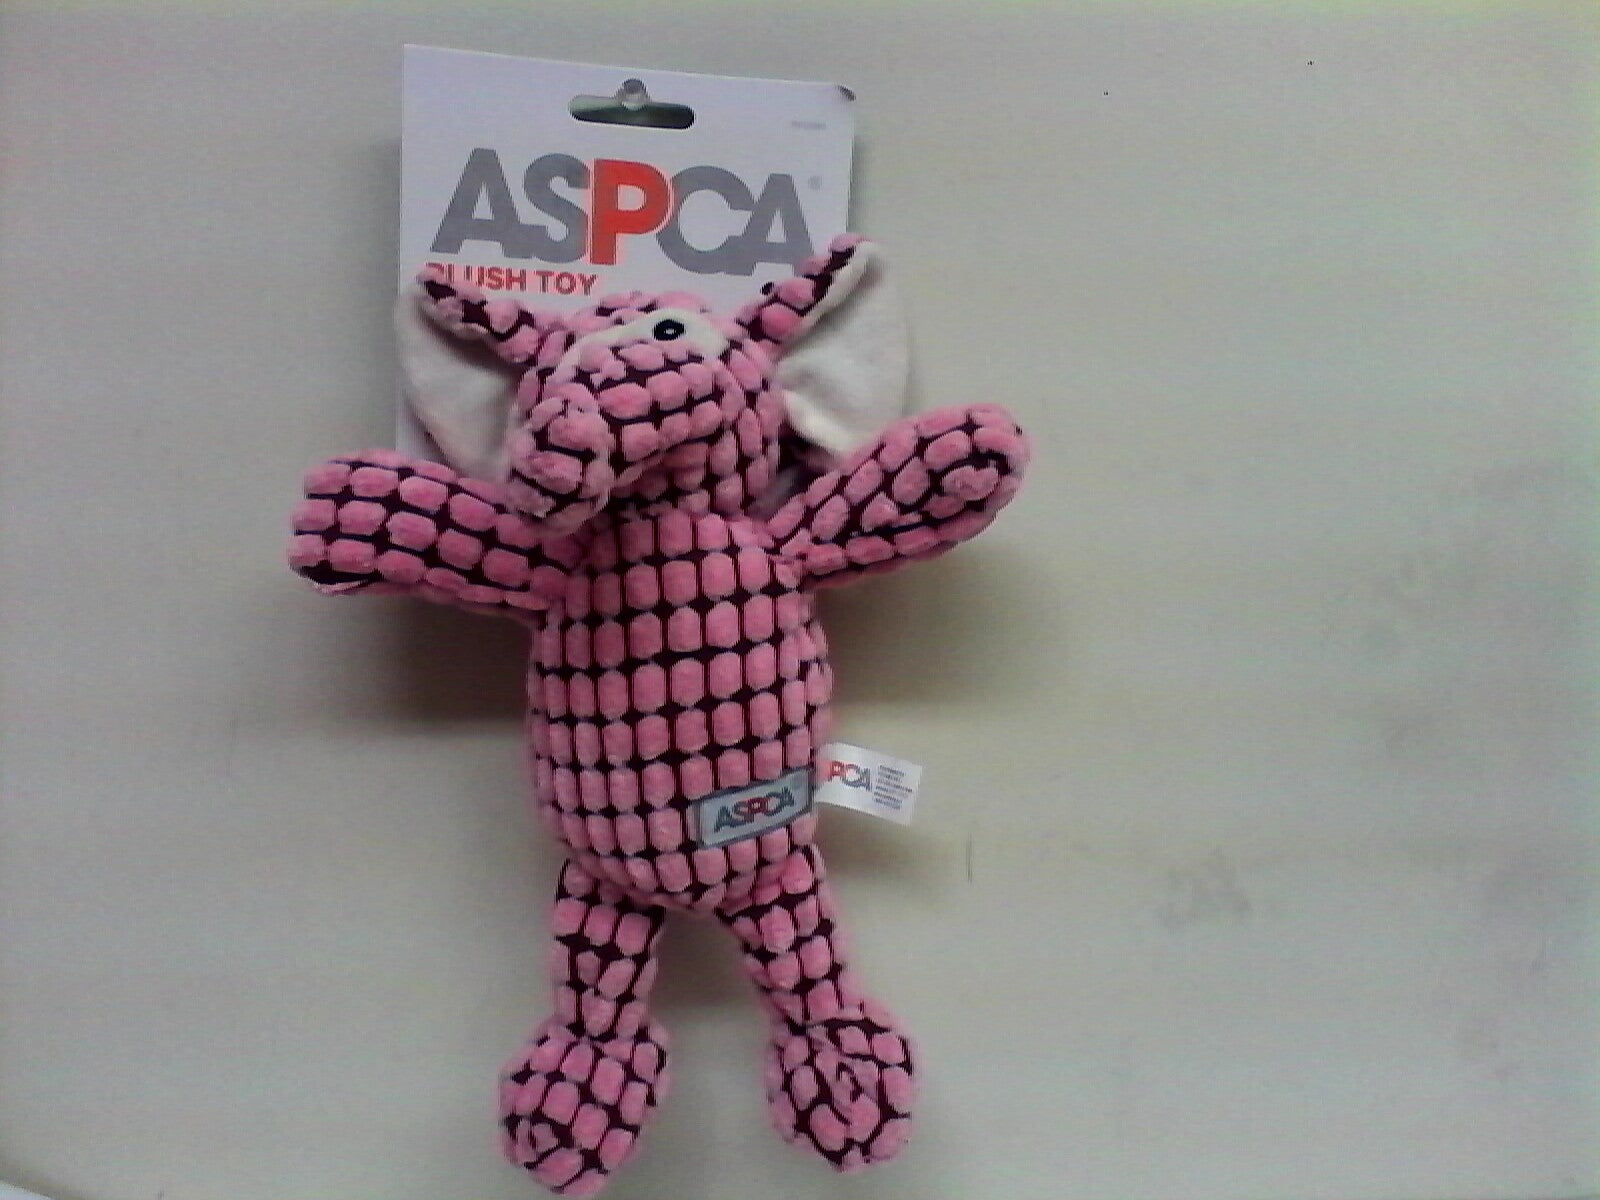 ASPCA Elephant Plush Toy